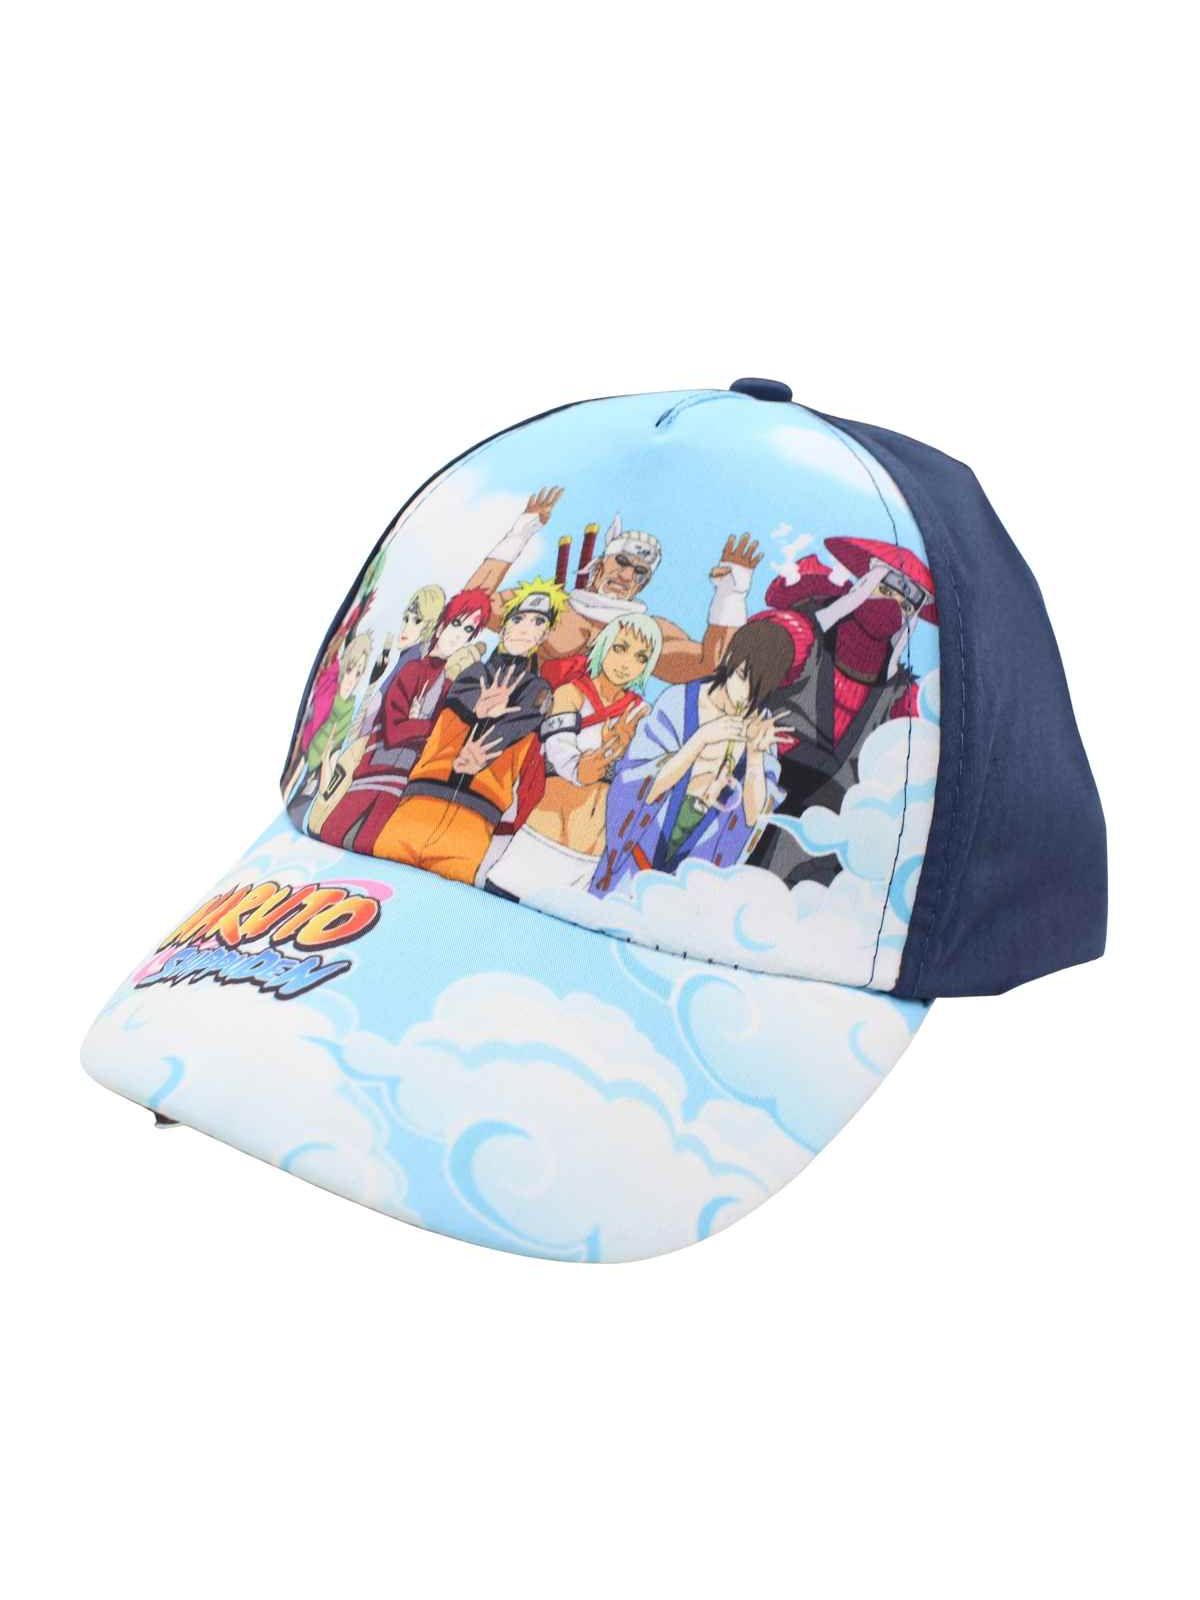 Naruto Cap with visor